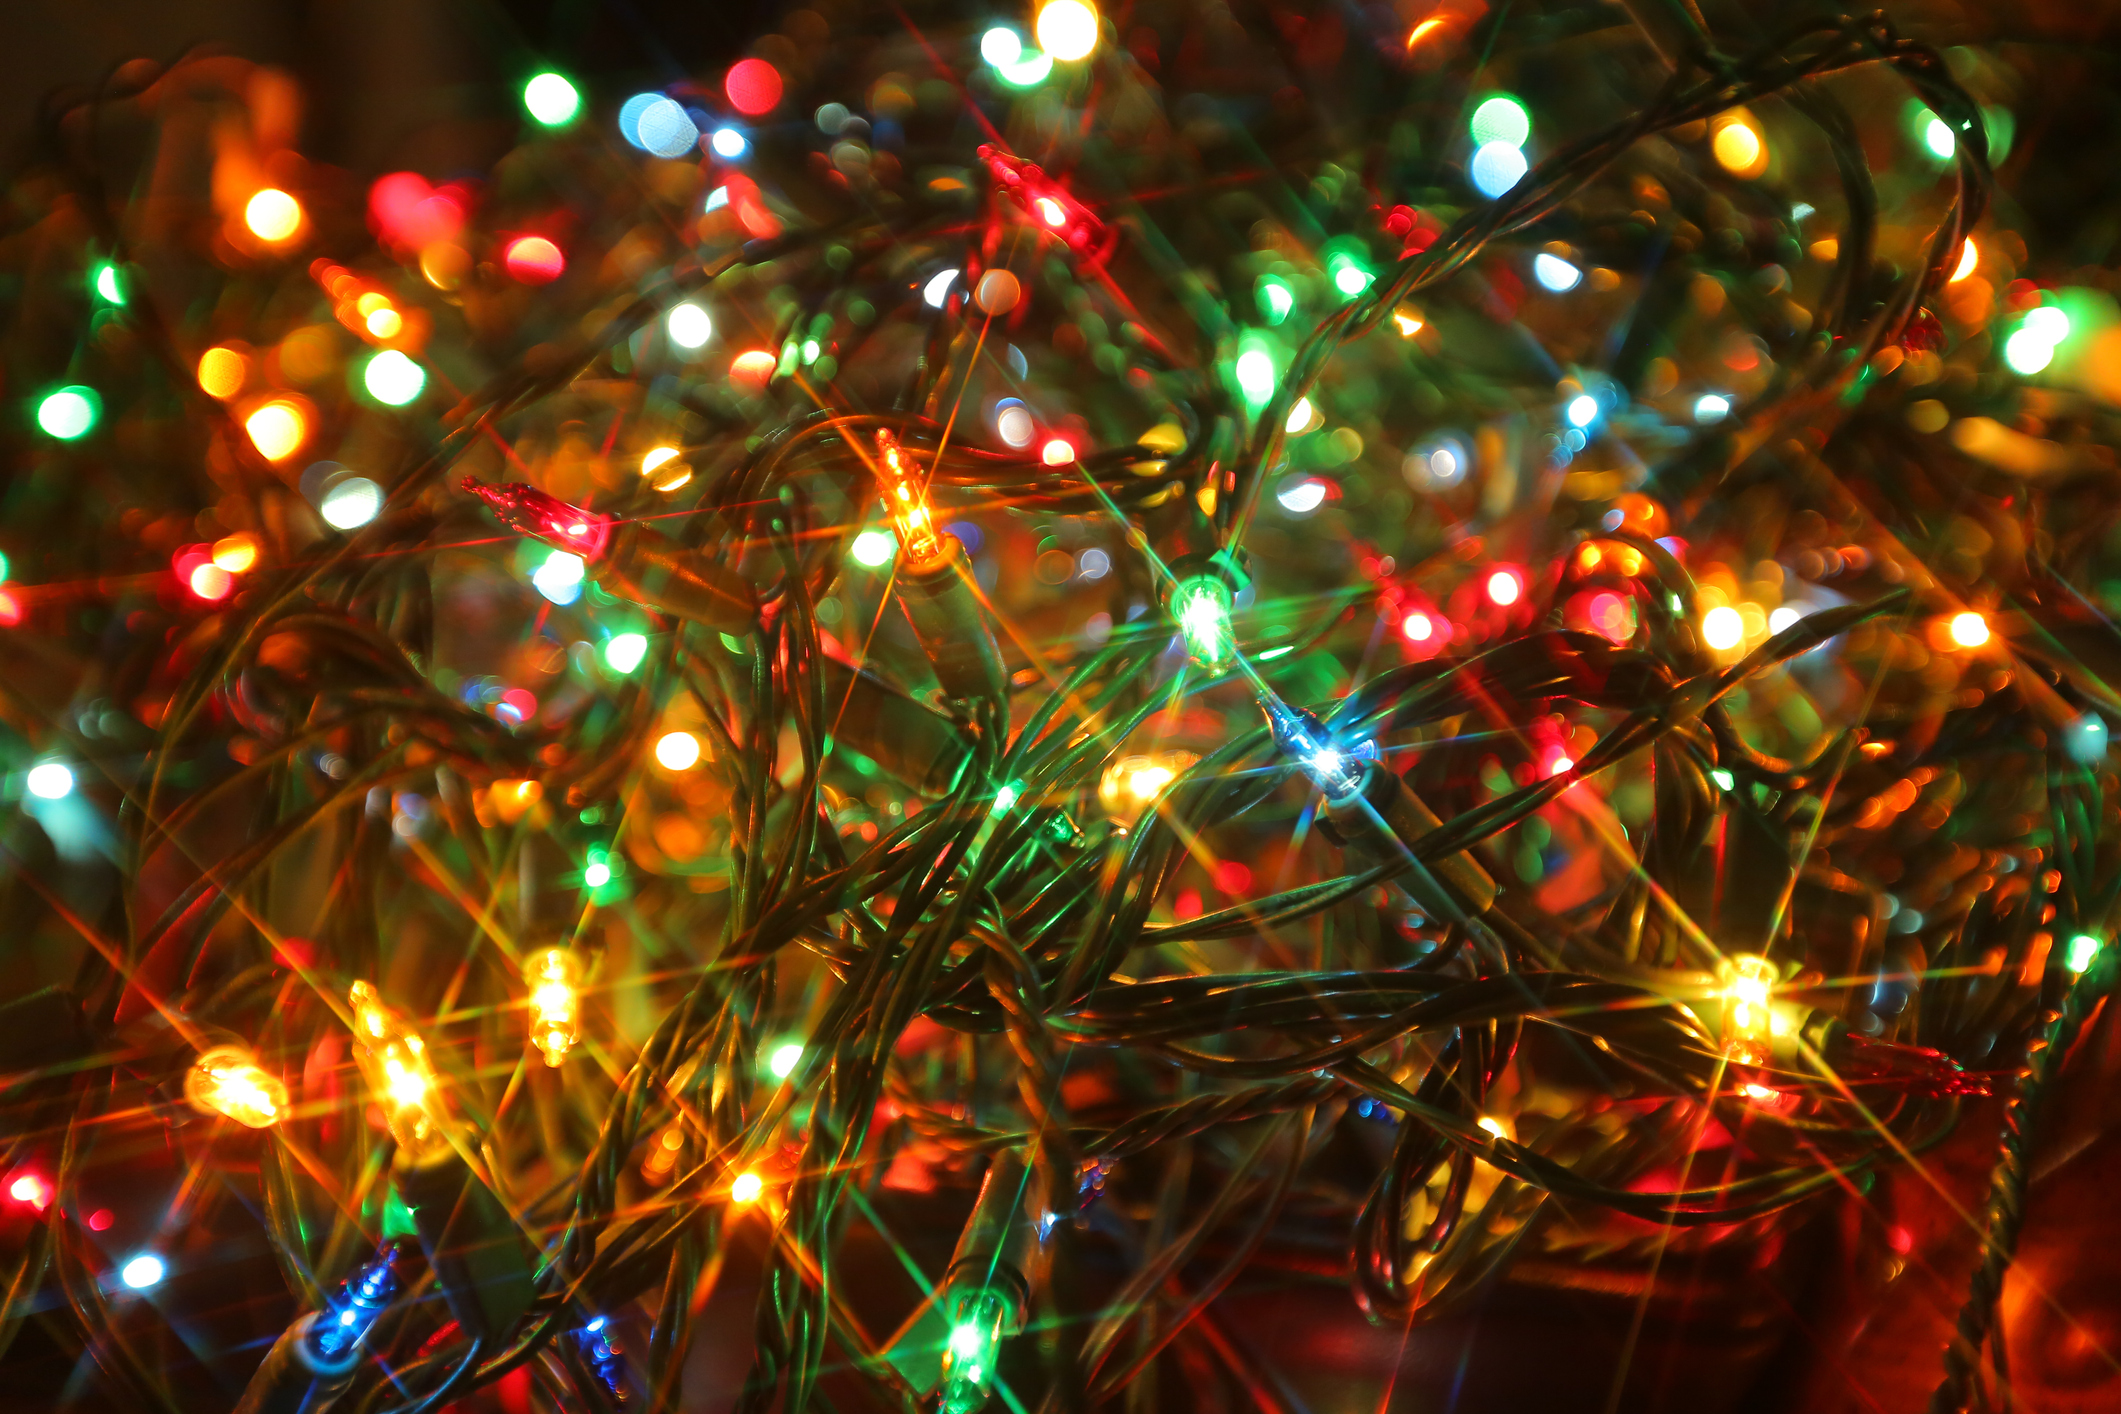 Huntington’s Christmas tree on Wall Street will not return this year